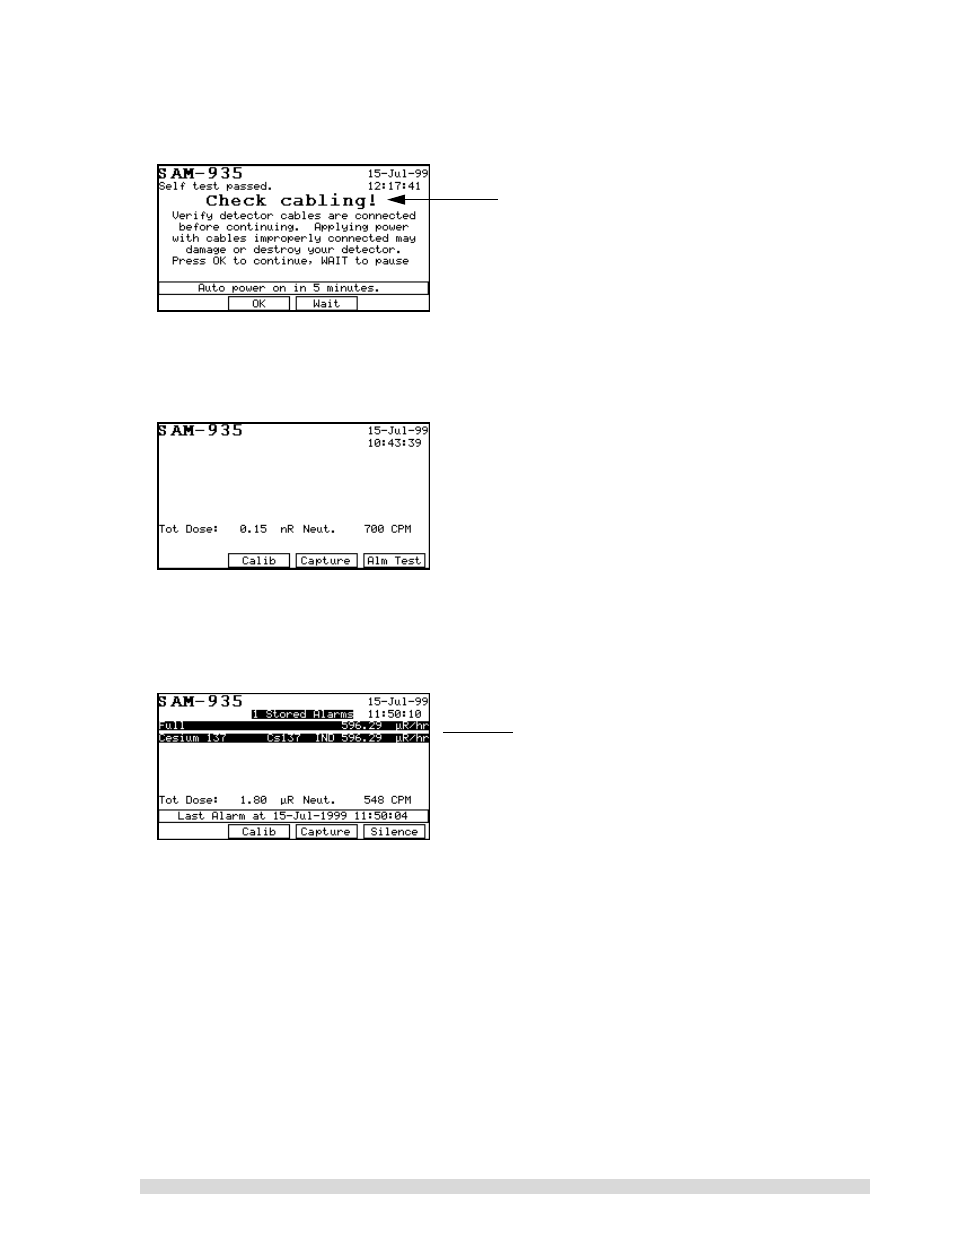 BNC SAM 935 Portable Gamma Spectroscopy System User Manual | Page 25 / 70